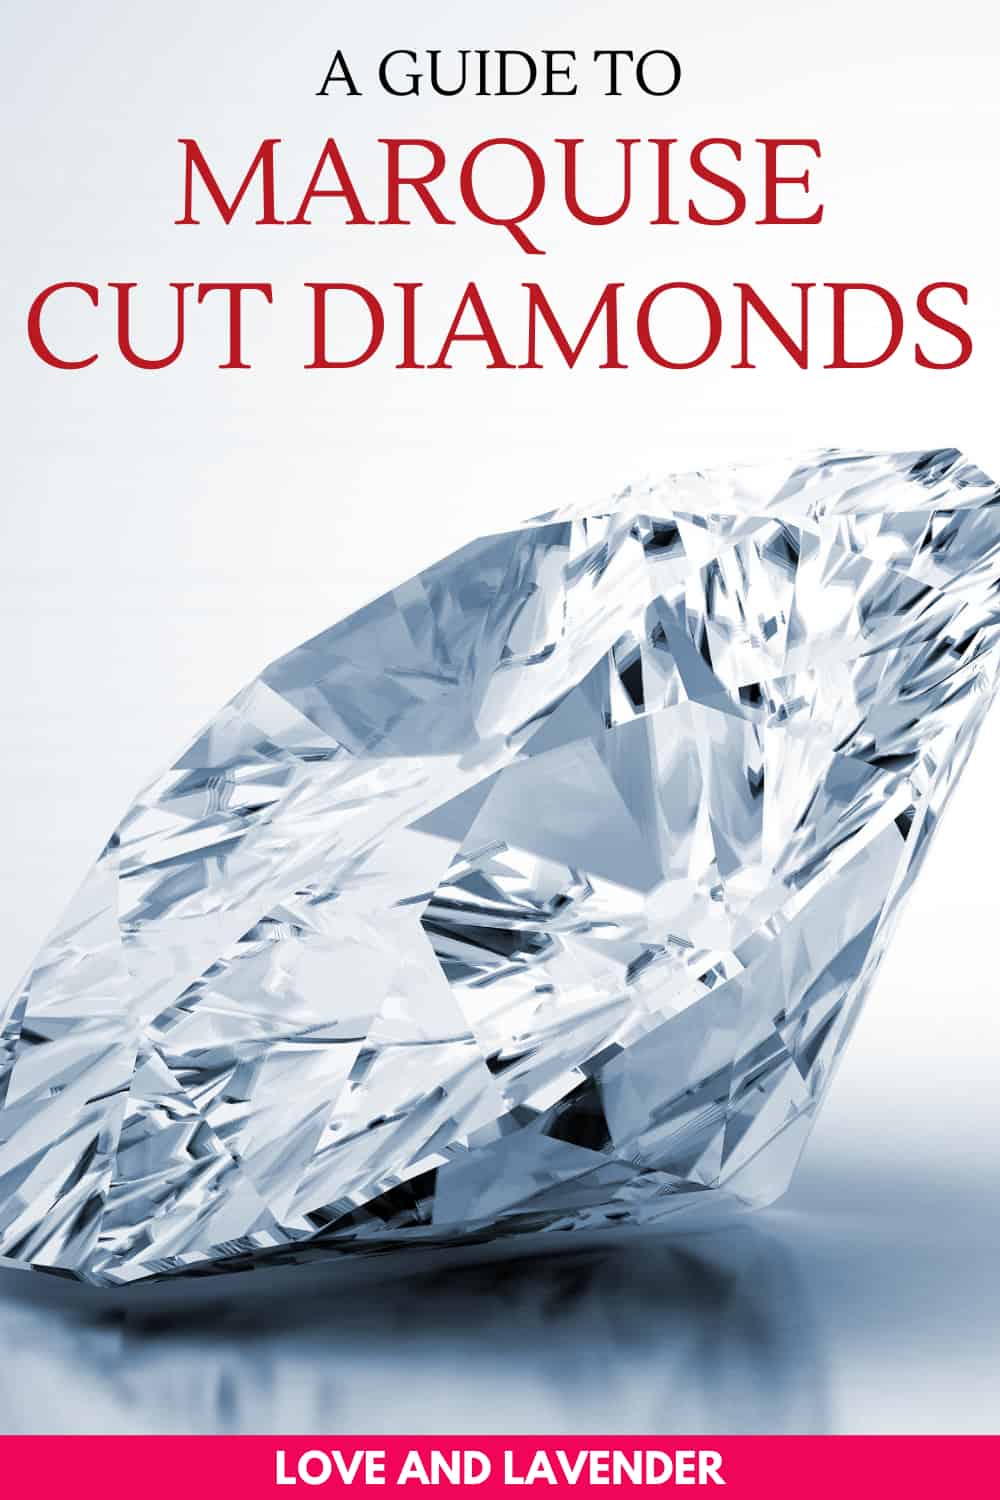 Marquise Cut Diamonds: Cutting a Fine Figure Since the 1700s